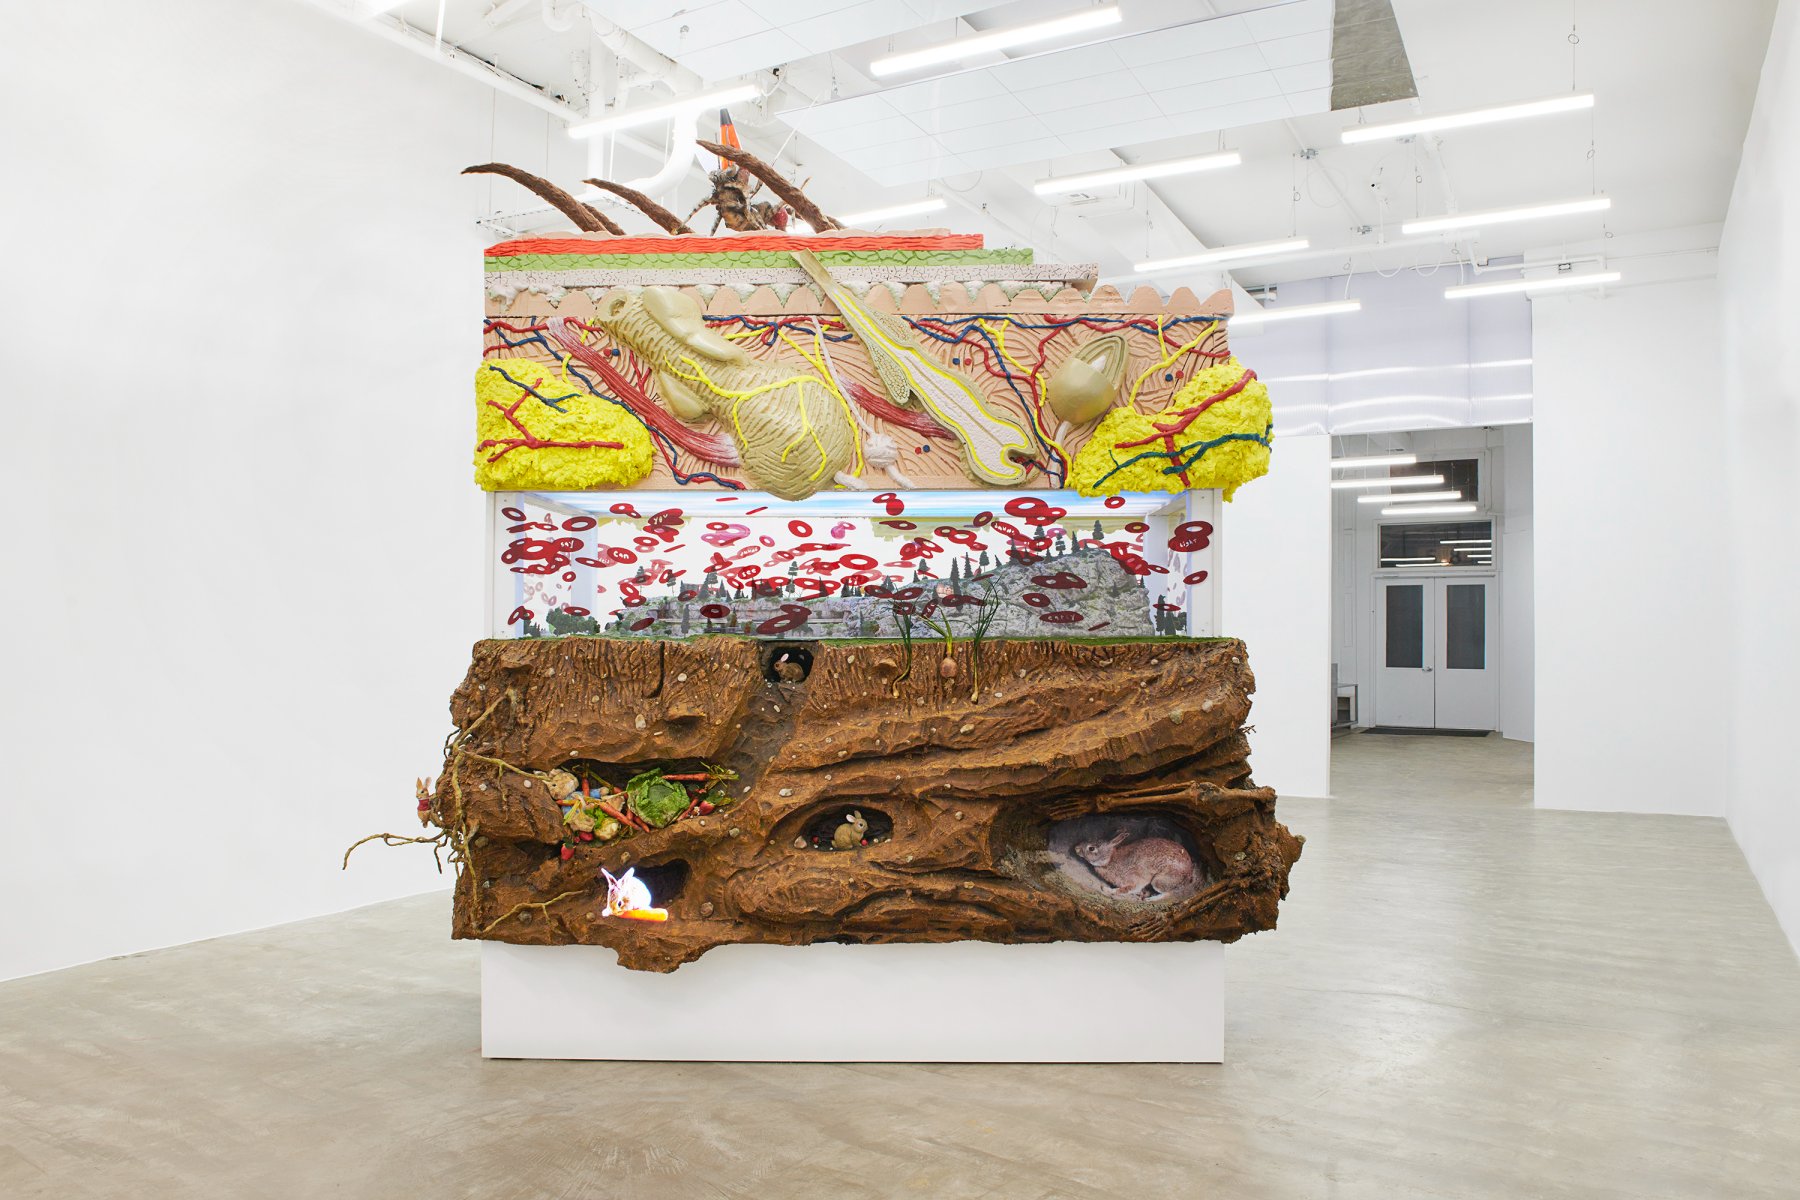 Installation image for Trey Abdella: Under the Skin, at David Lewis